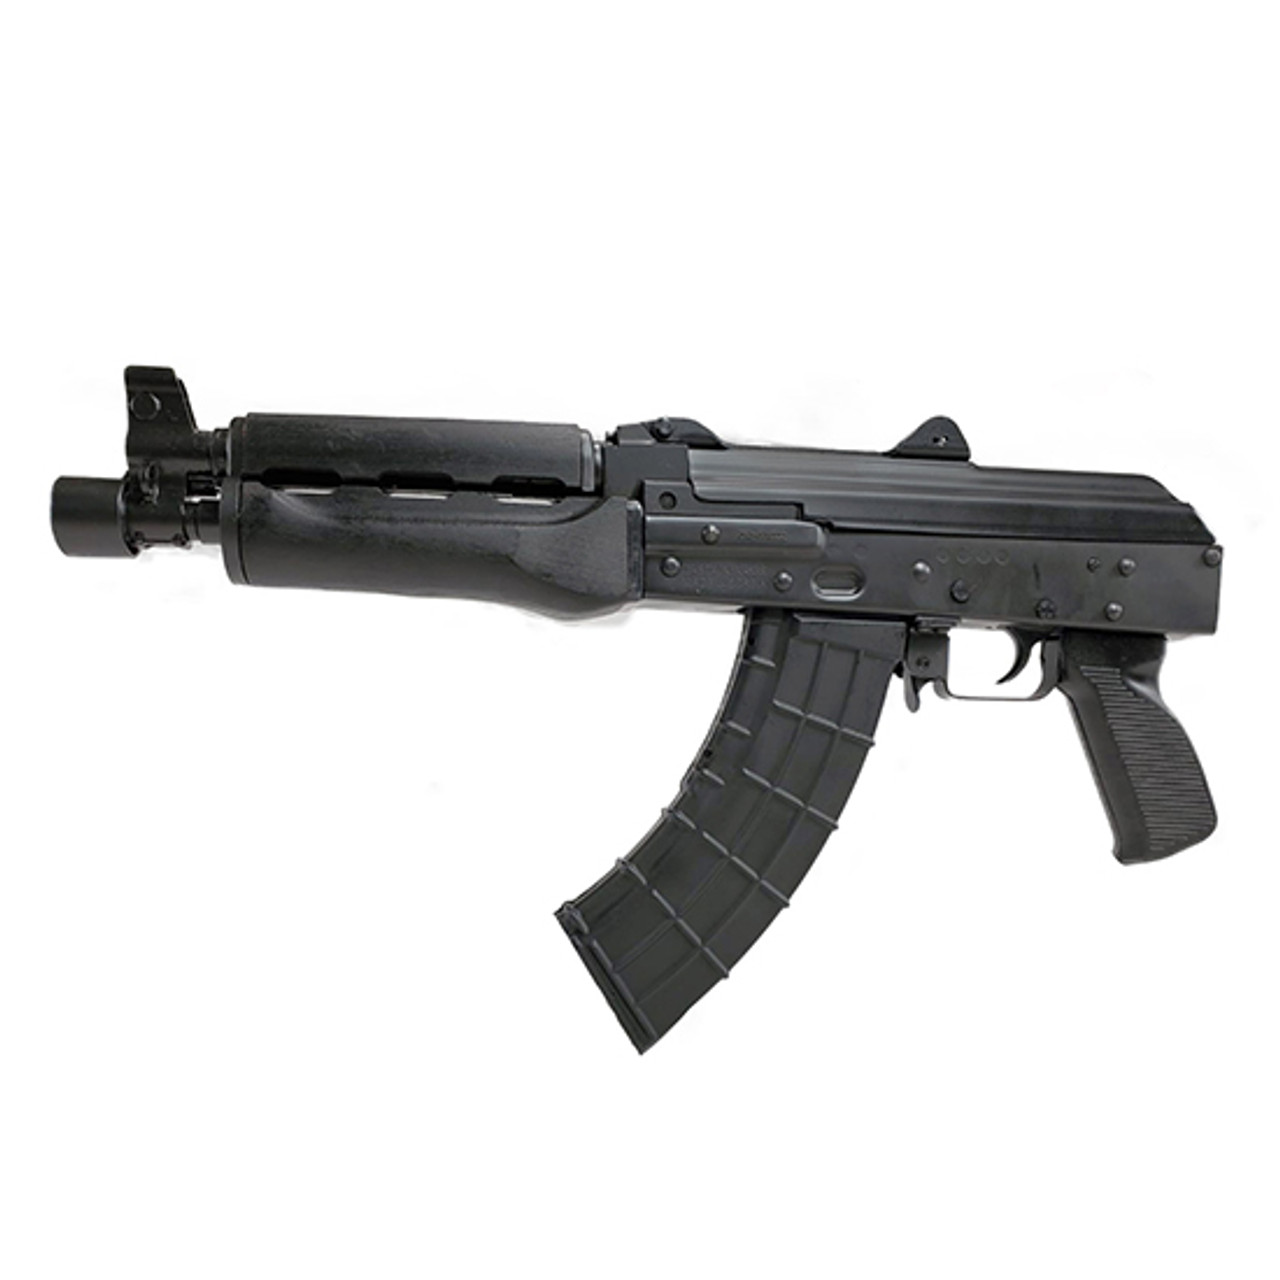 The AK-47 Weapon Guide - CS LAB